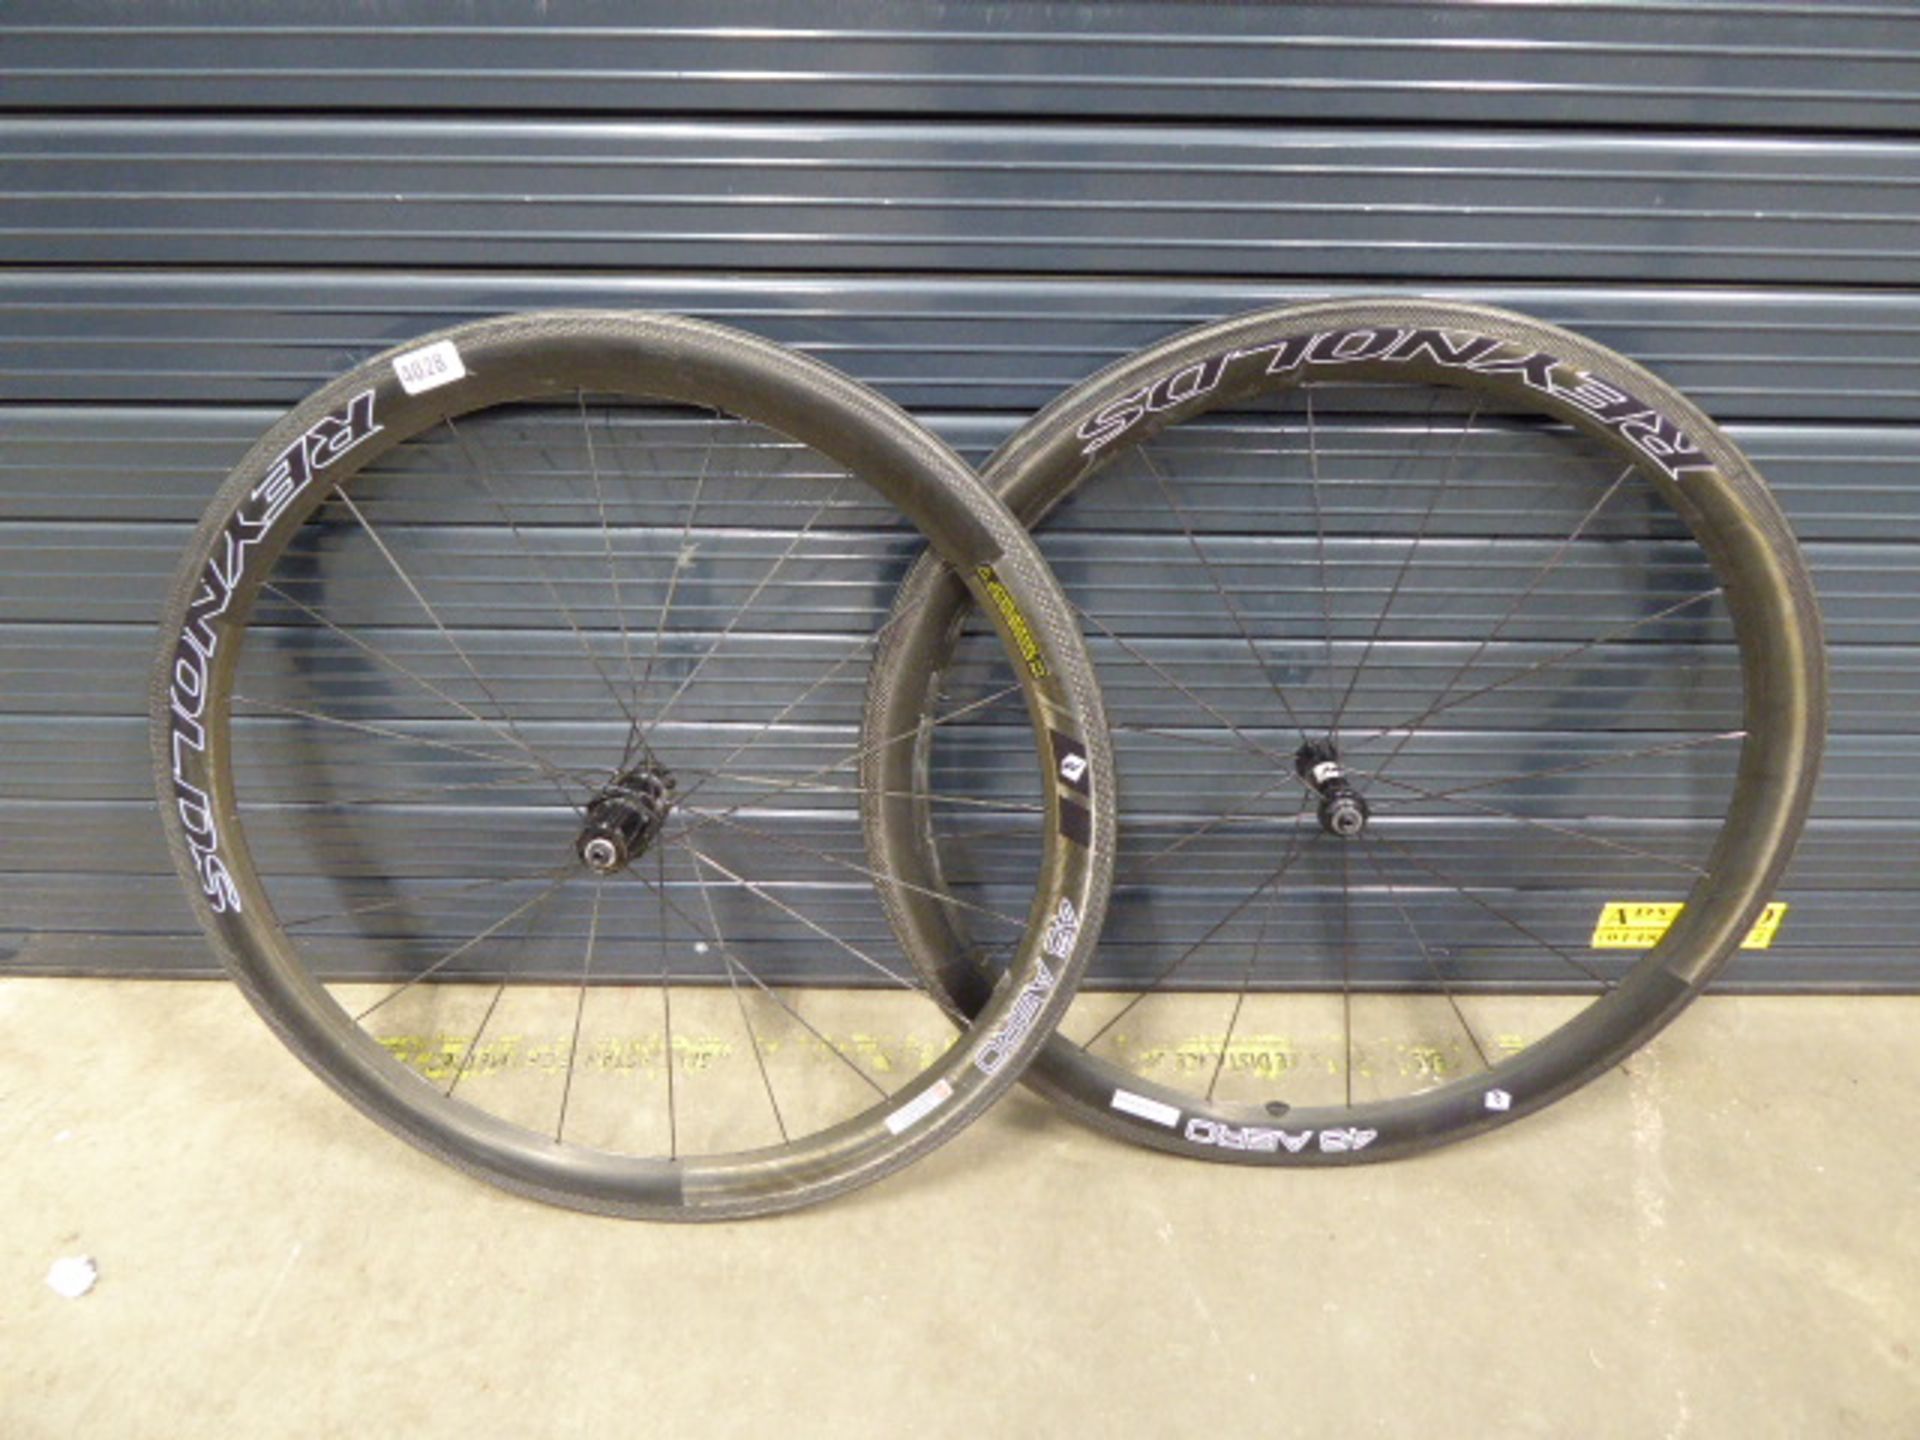 2 Reynolds carbon fibre bike wheels